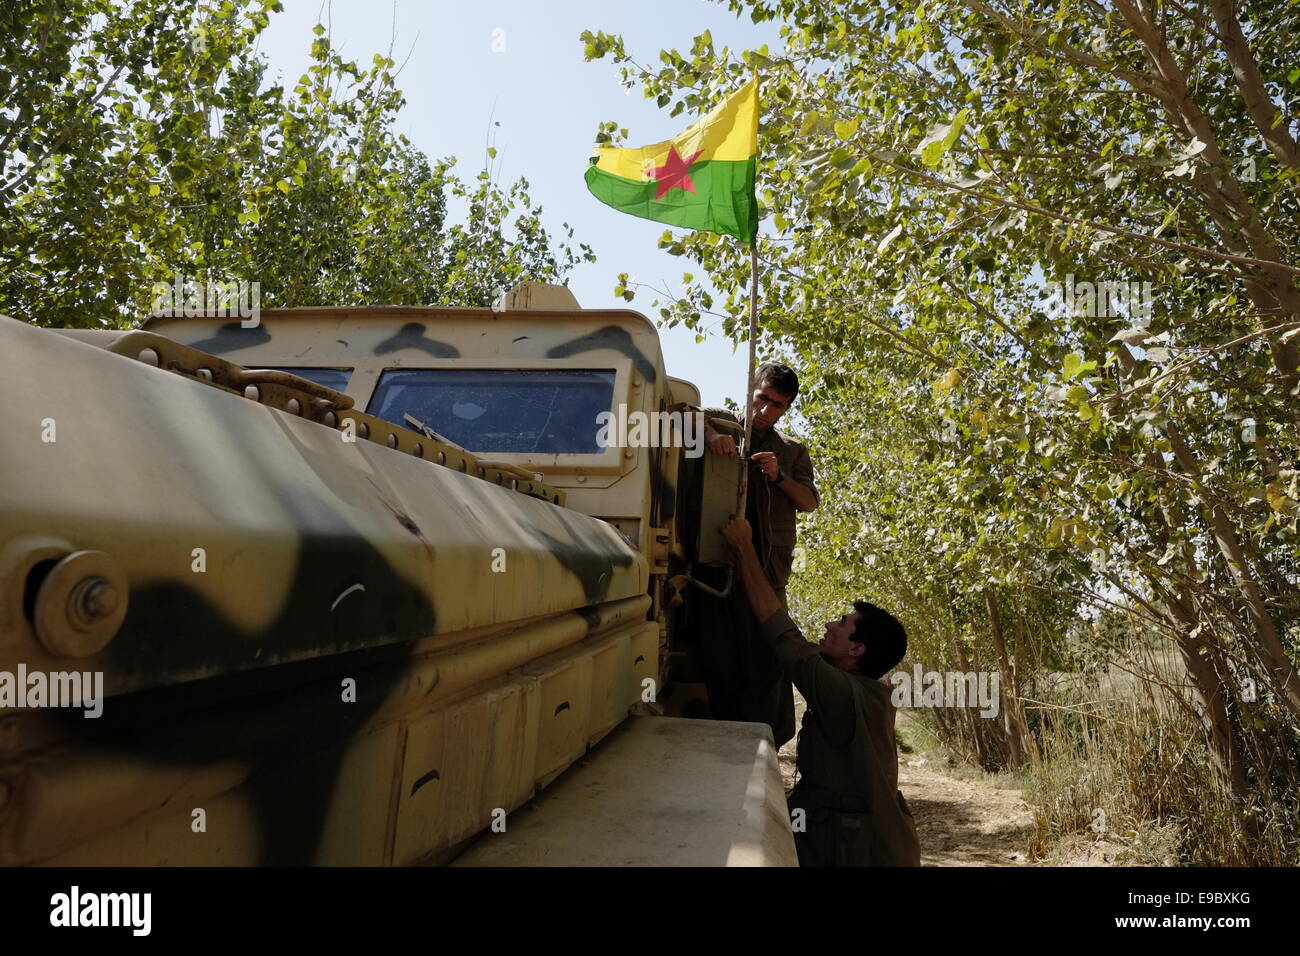 Kurdistan vs Iraq, Iraqi smoke flags placed side by side. Thick colored  silky smoke flags of Kurds and Iraq, Iraqi Stock Photo - Alamy